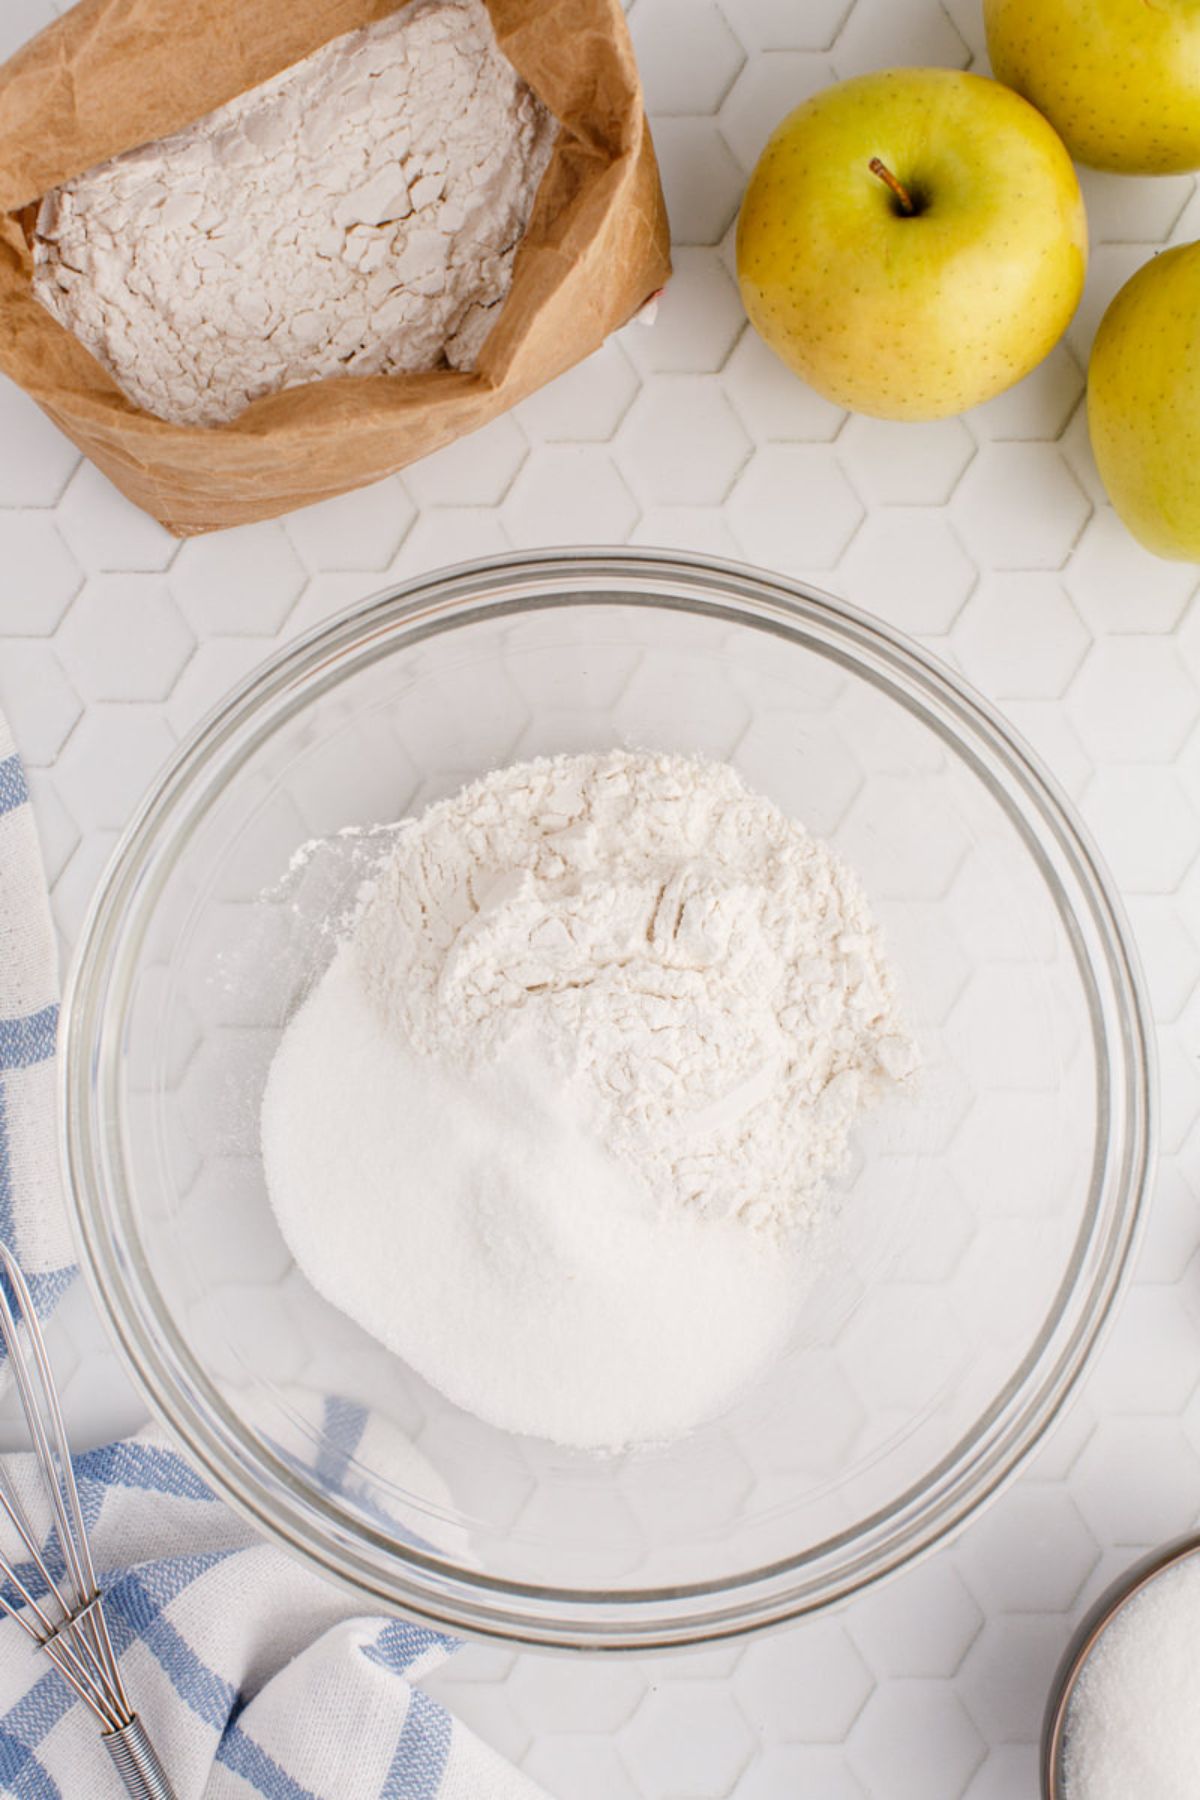 Flour and sugar in a bowl.